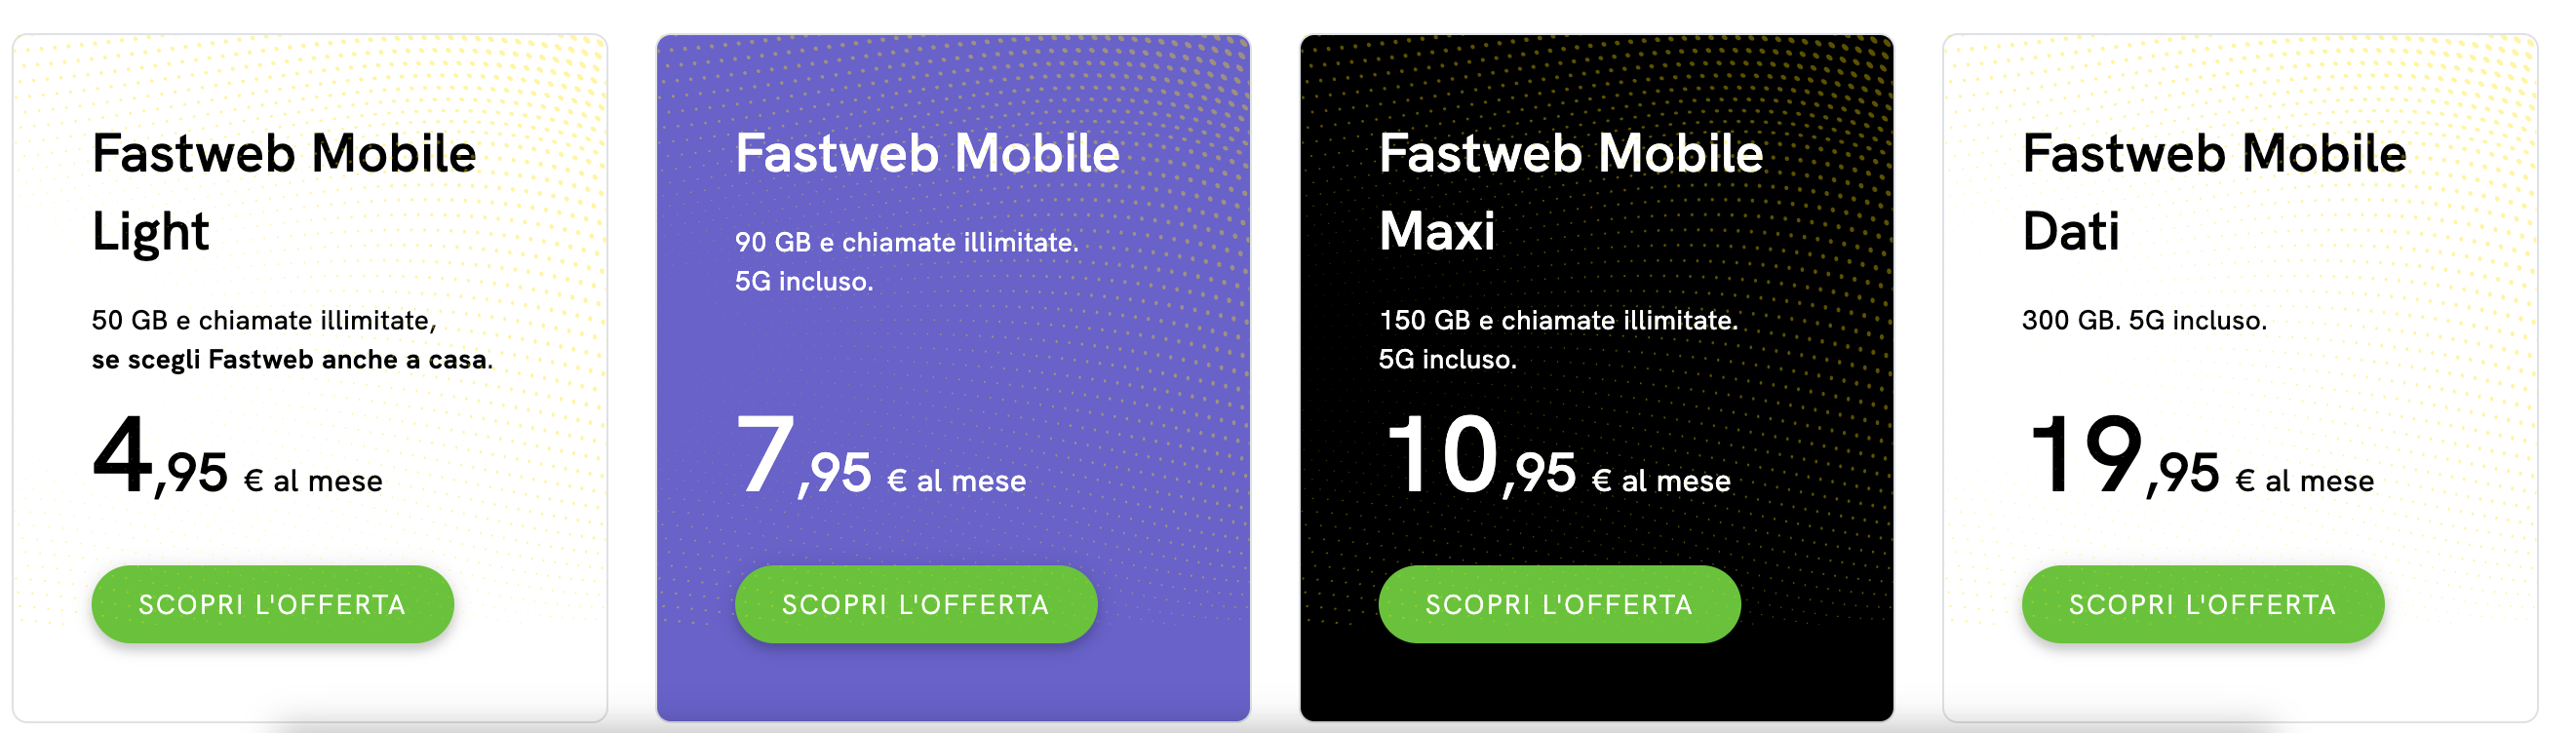 Fastweb Mobile recensioni